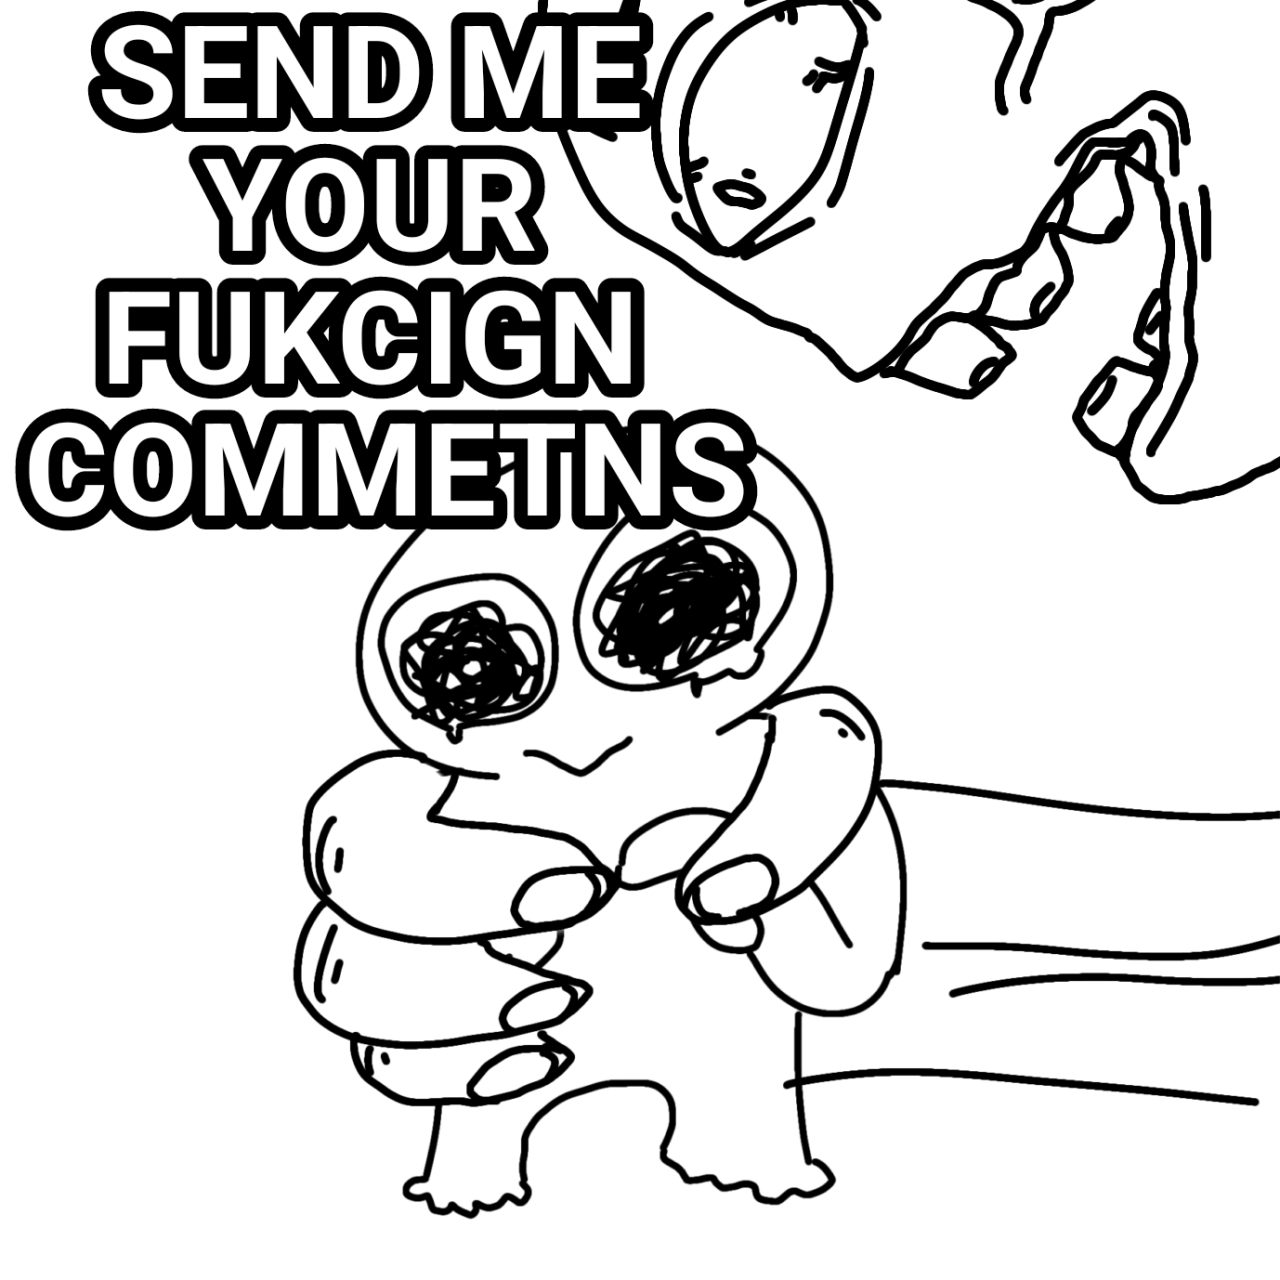 anime memes but i removed the cringe with delirium : r/bindingofisaac